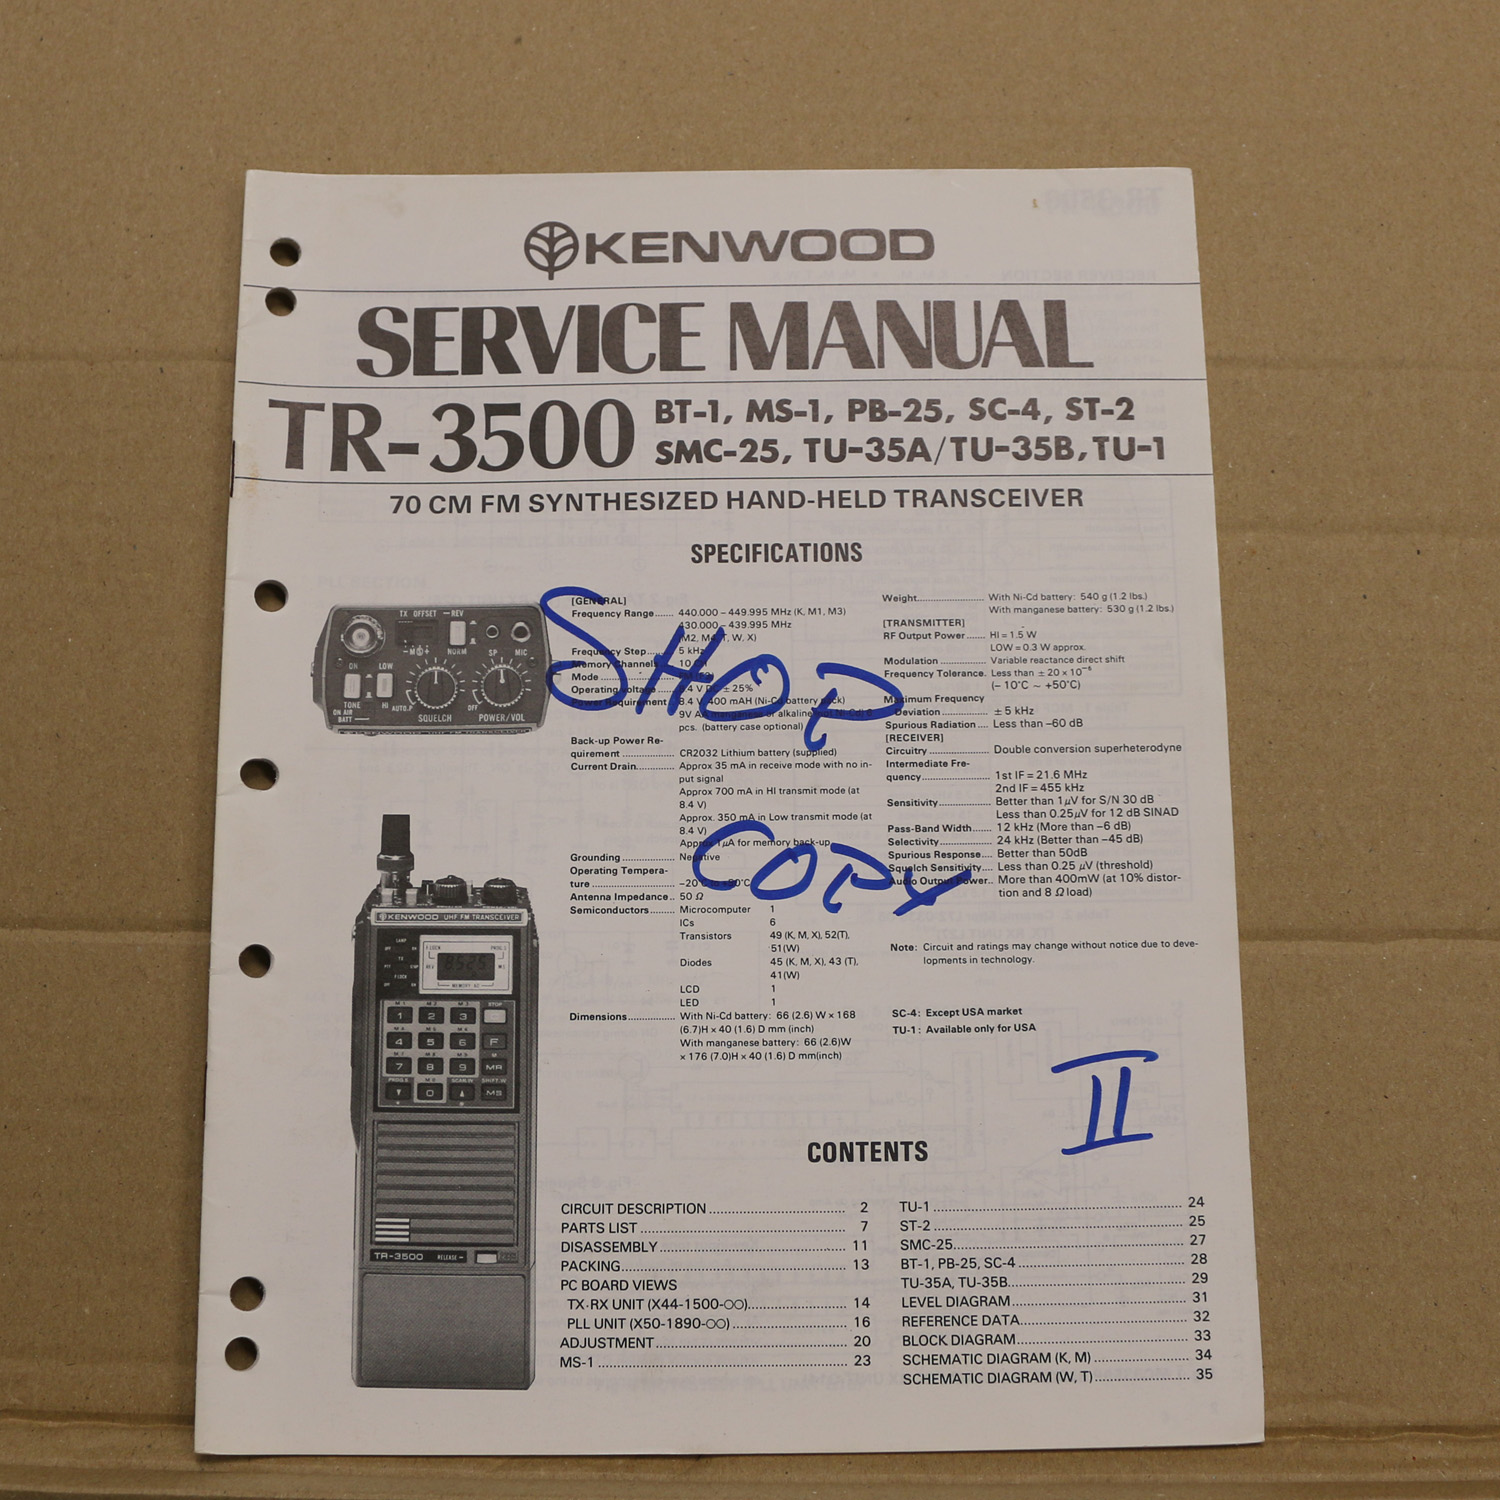 Kenwood TR-3500 Service Manual